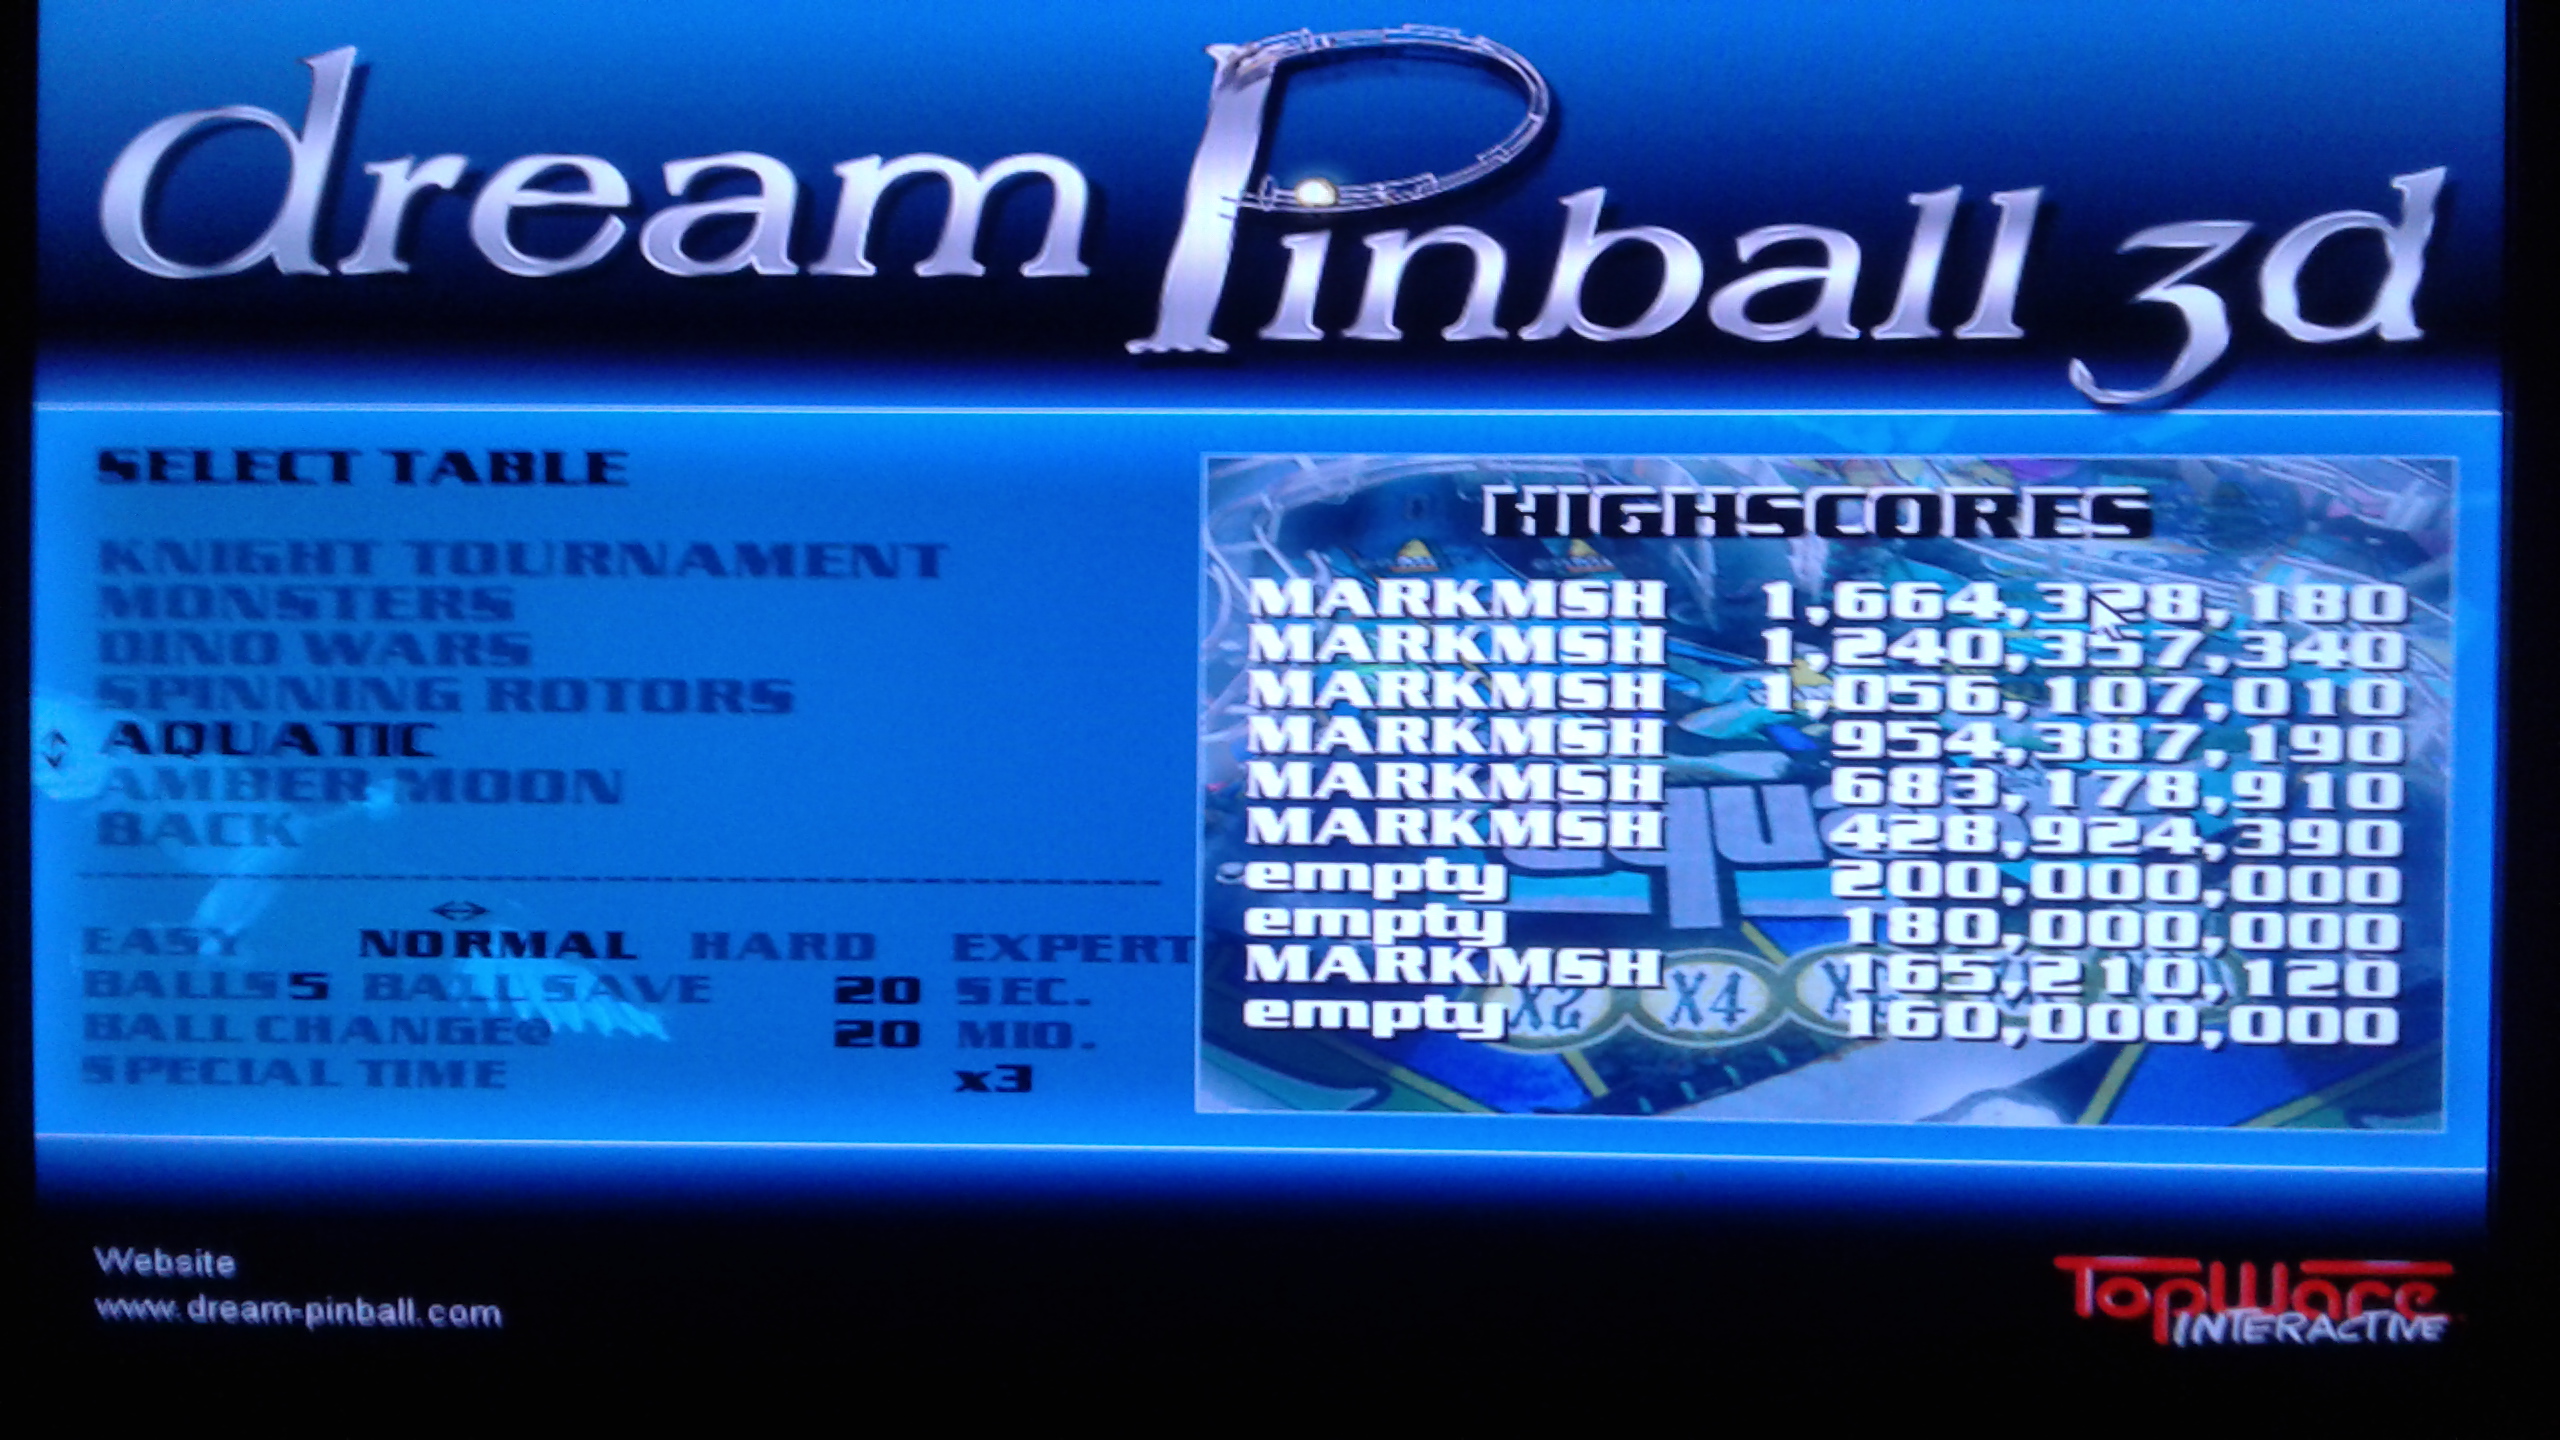 Mark: Dream Pinball 3D: Aquatic [Normal] (PC Emulated / DOSBox) 1,664,328,180 points on 2019-05-19 23:48:22